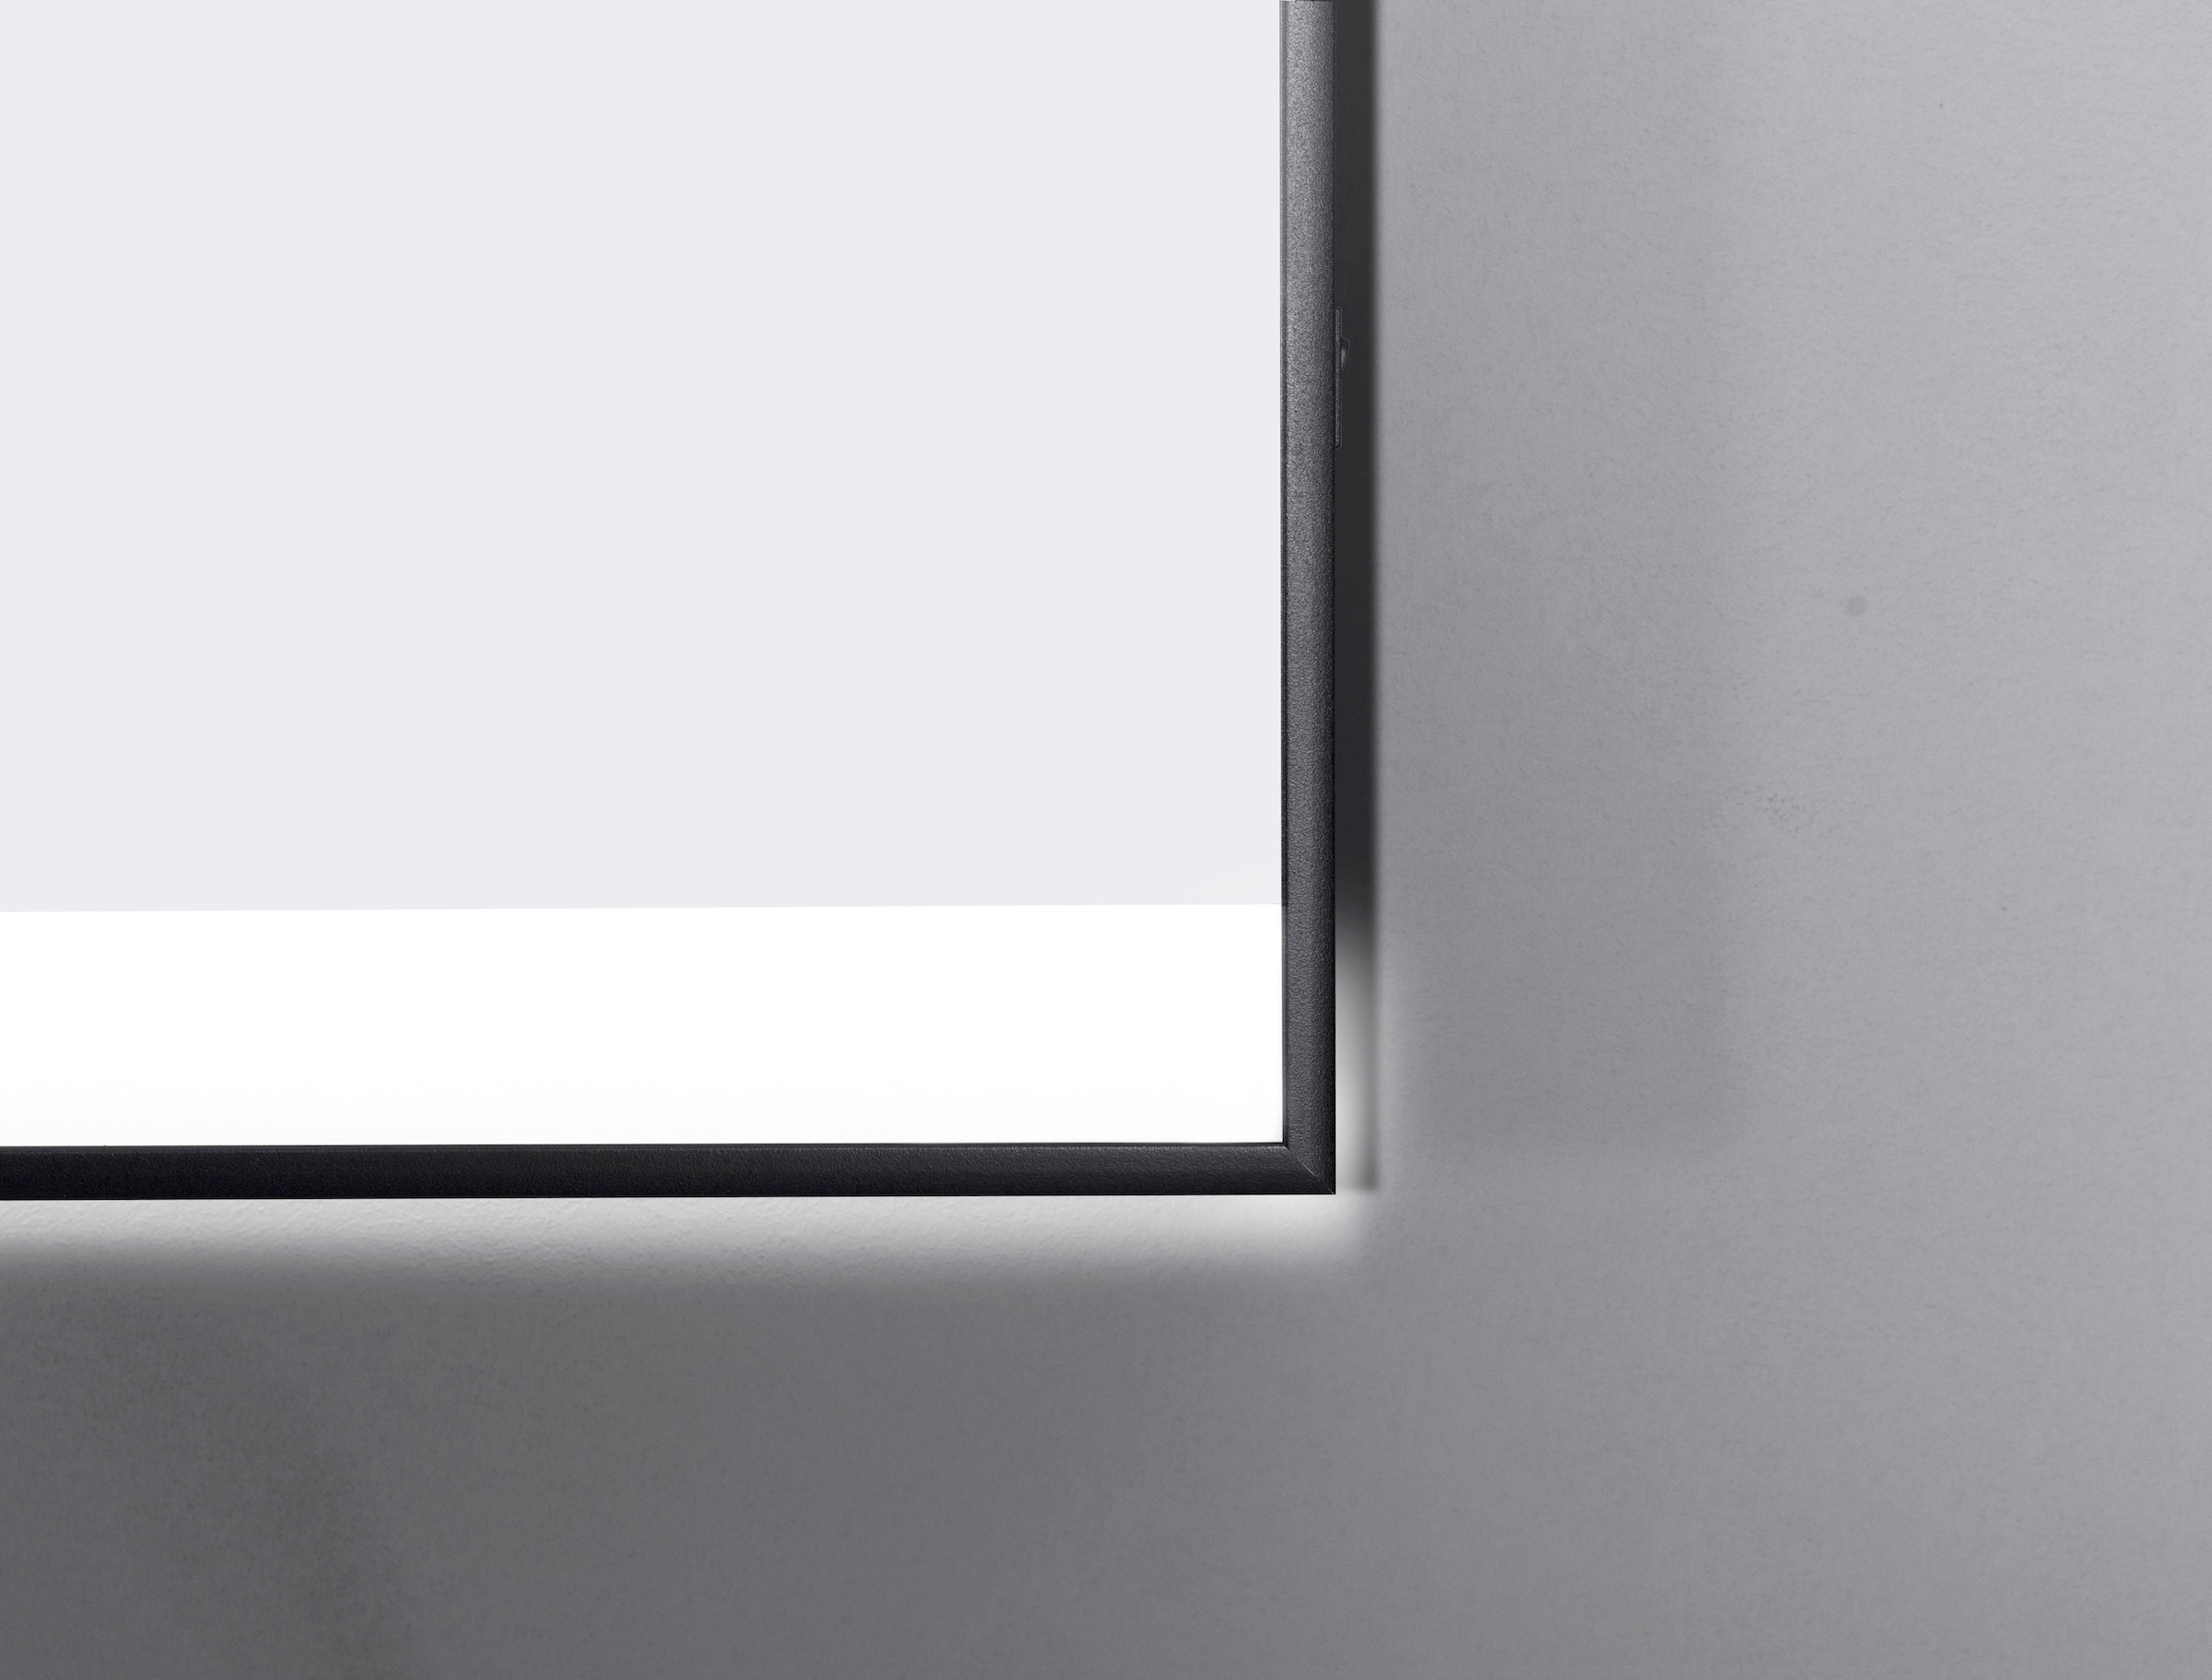 Talos Badspiegel »BLACK SHINE«, (Komplett-Set), BxH: 120x70 cm, energiesparend